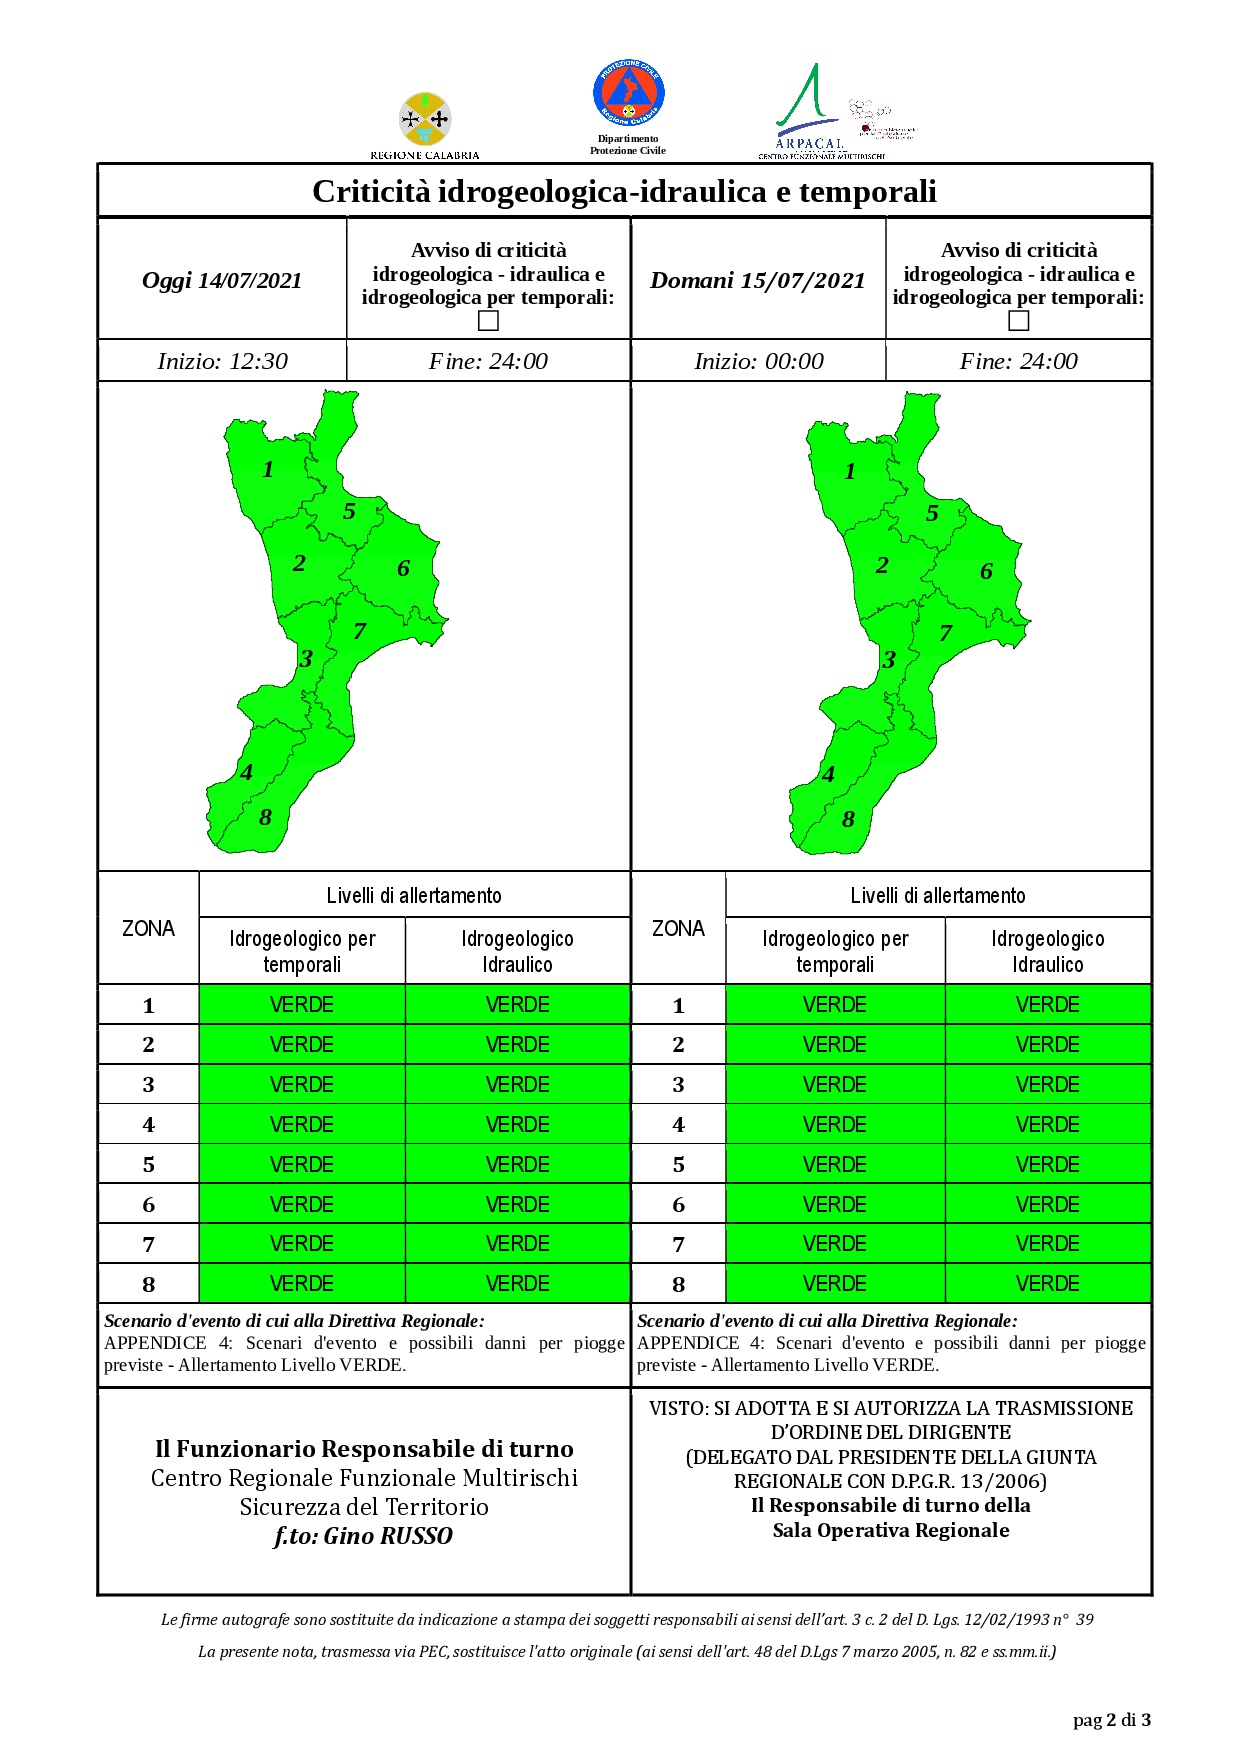 Criticità idrogeologica-idraulica e temporali in Calabria 14-07-2021